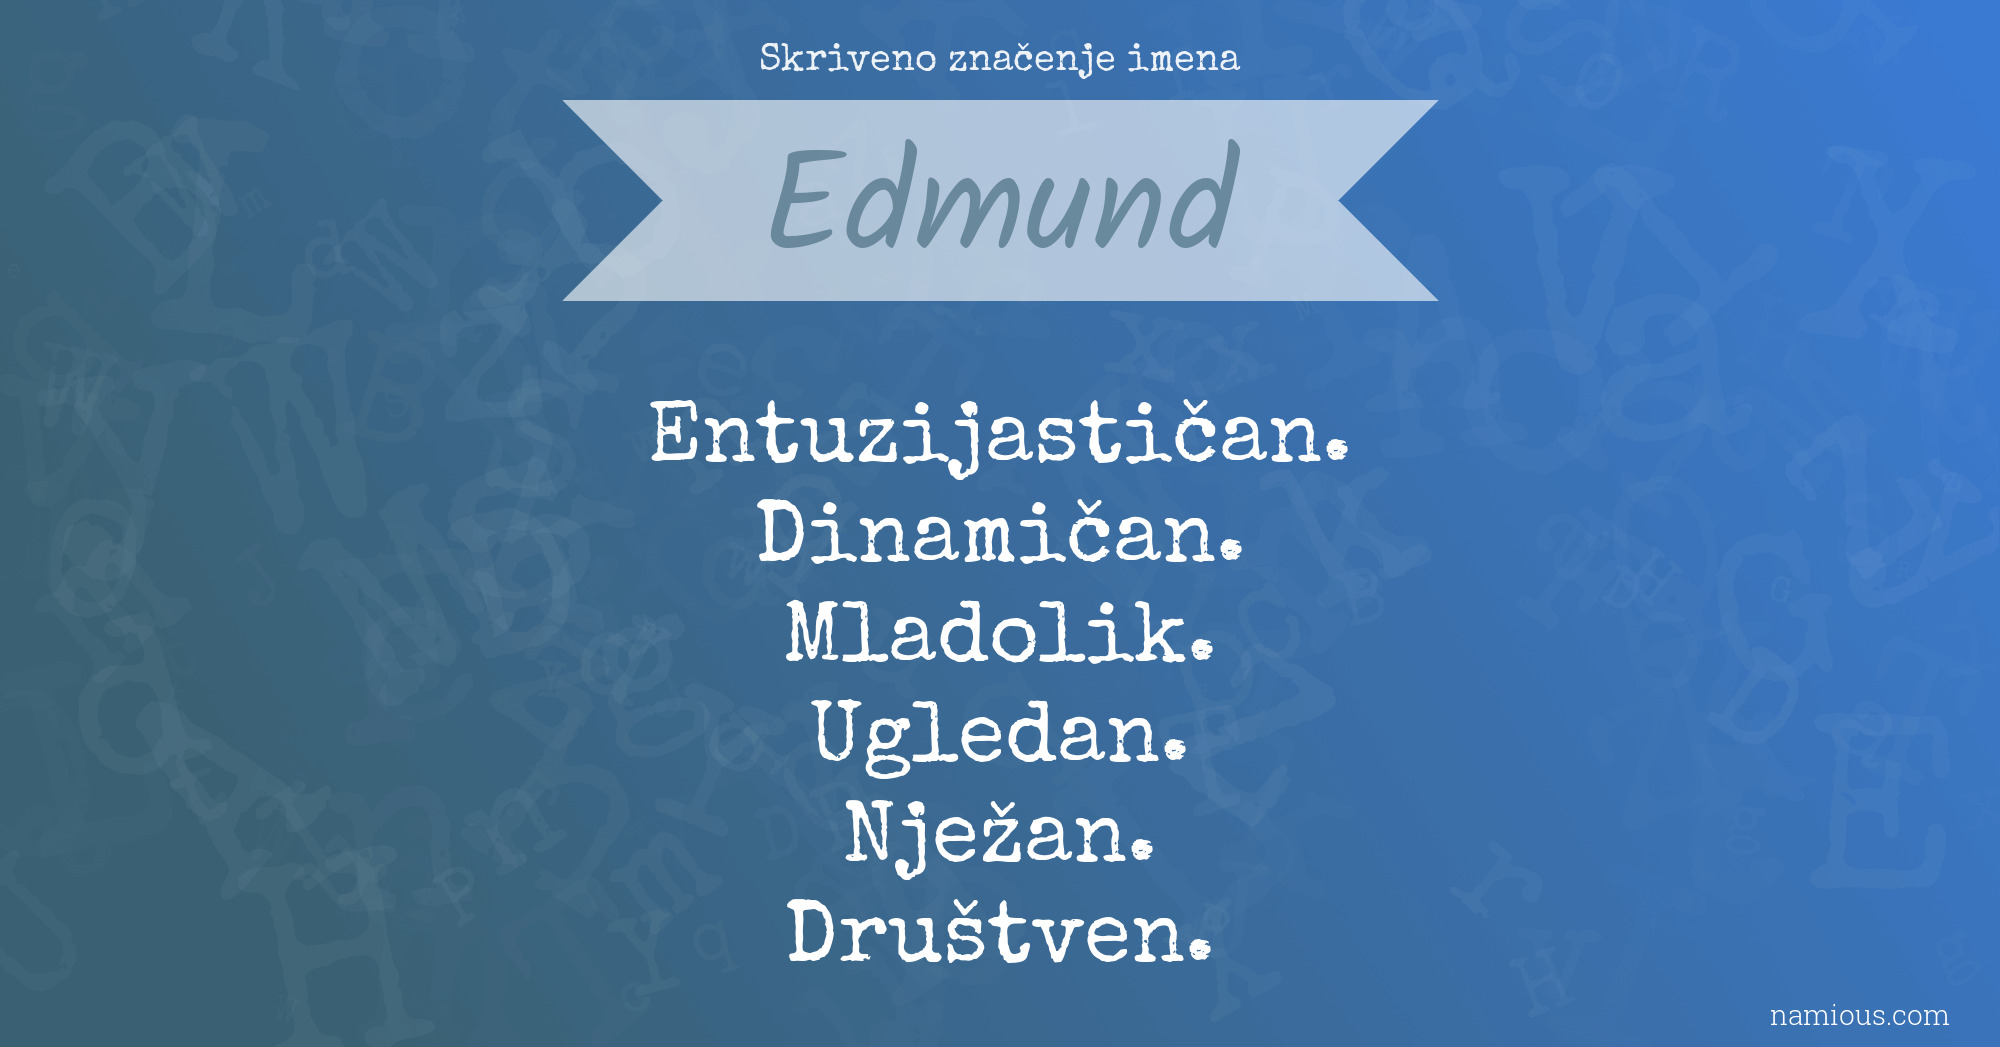 Skriveno značenje imena Edmund